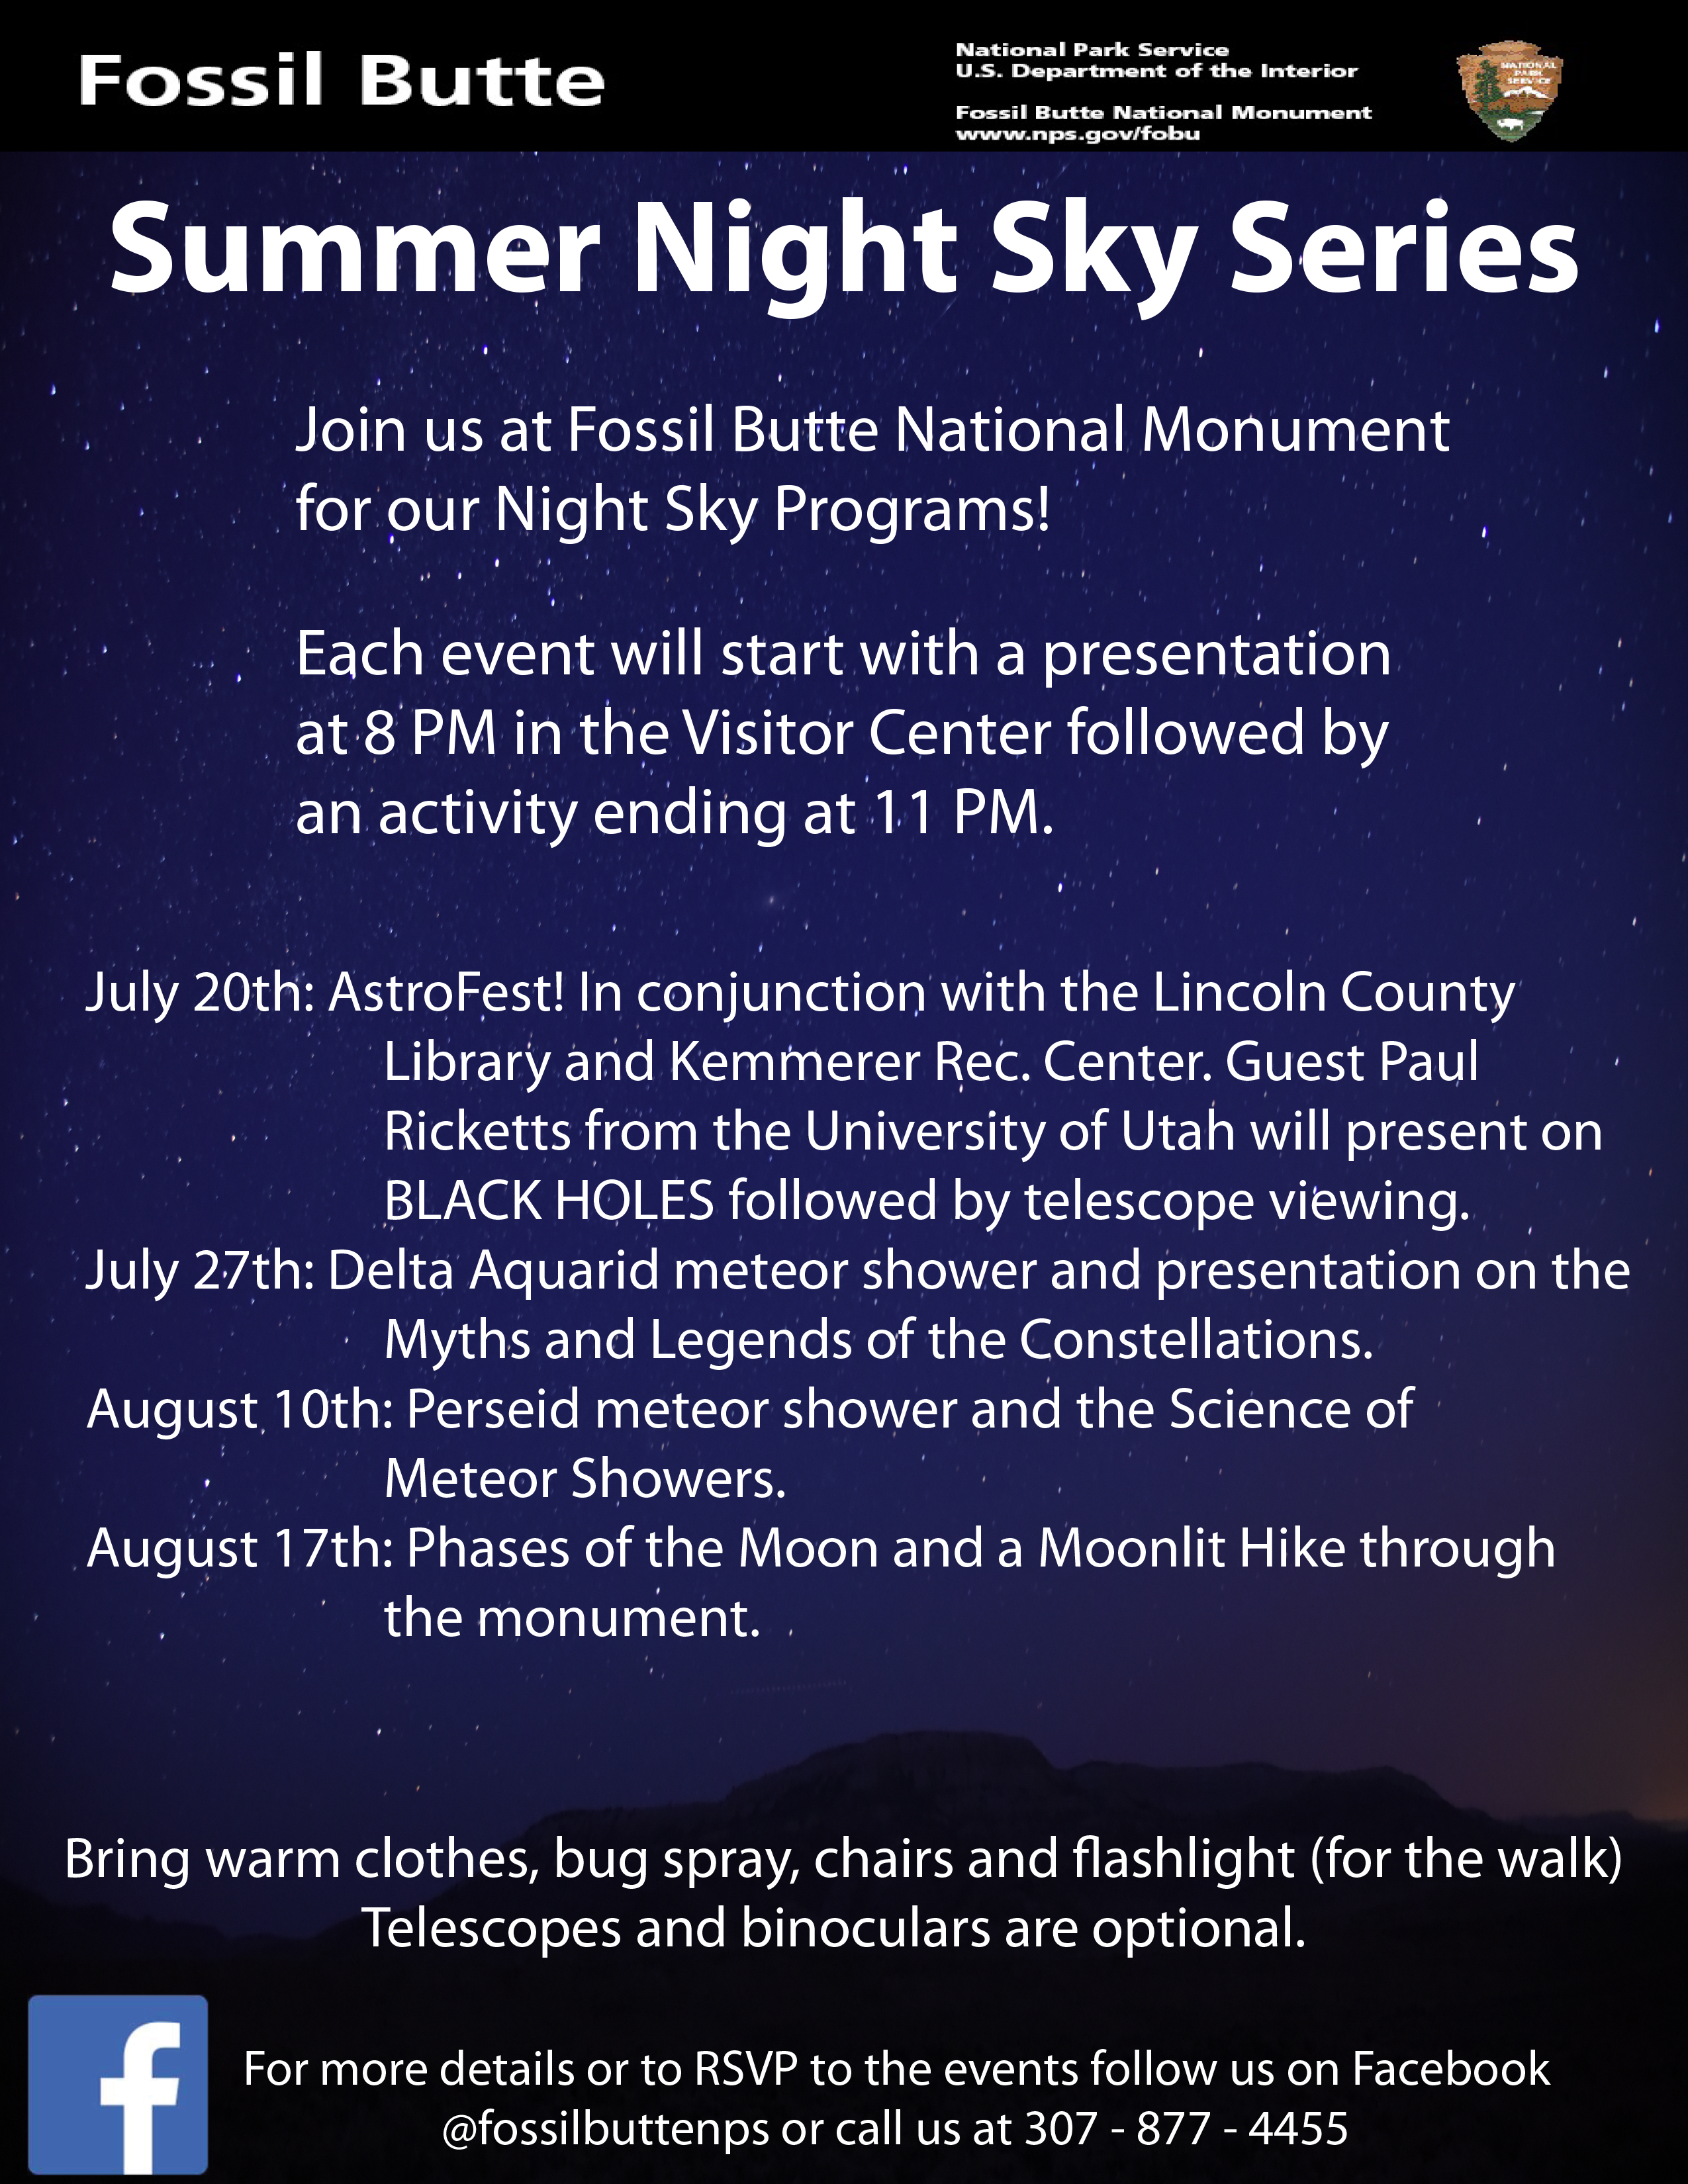 poster describing details of night sky events